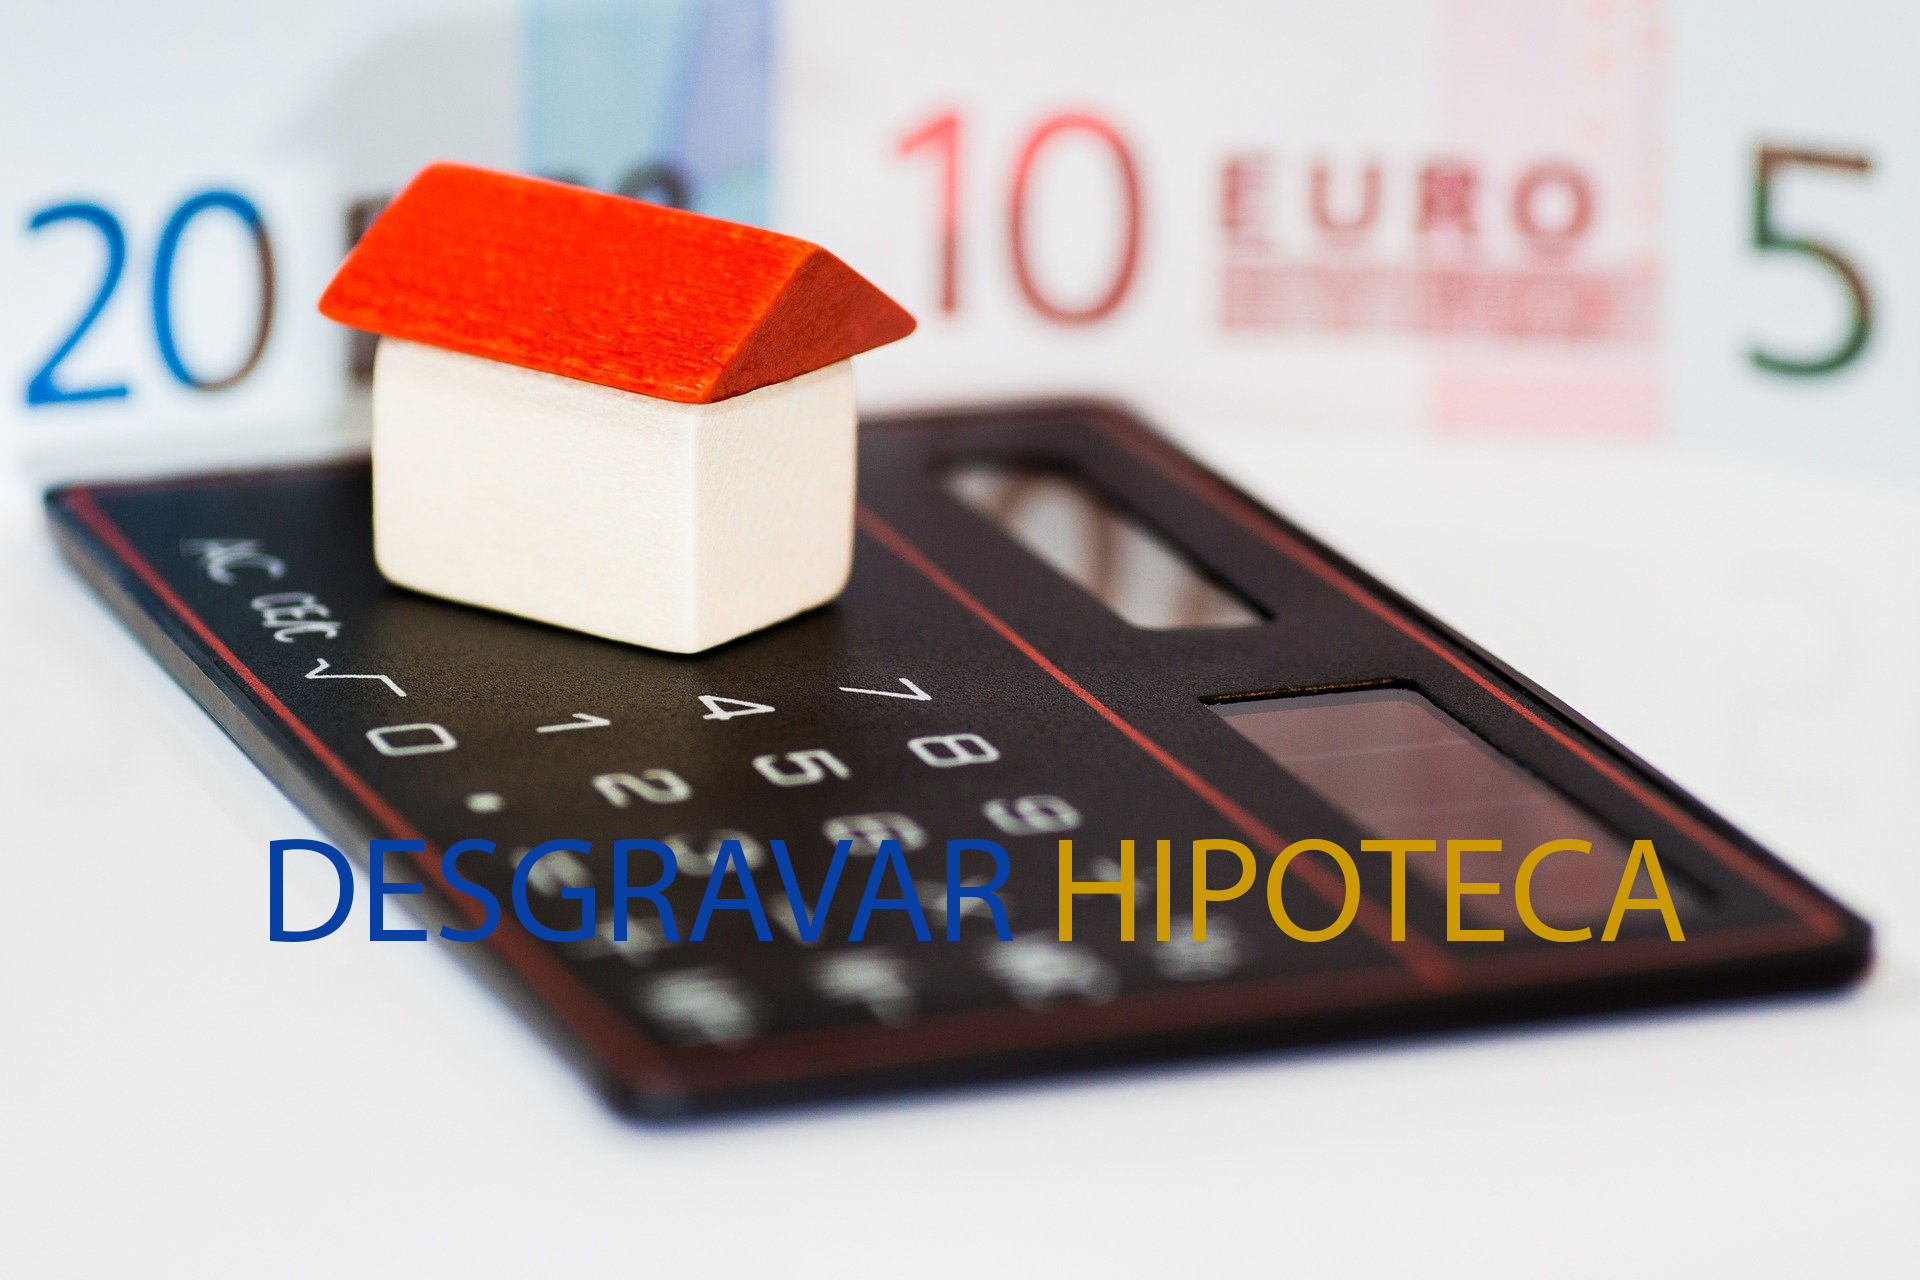 https://www.hipotecasplus.es/wp-content/uploads/desgravar-hipoteca-250x250.png